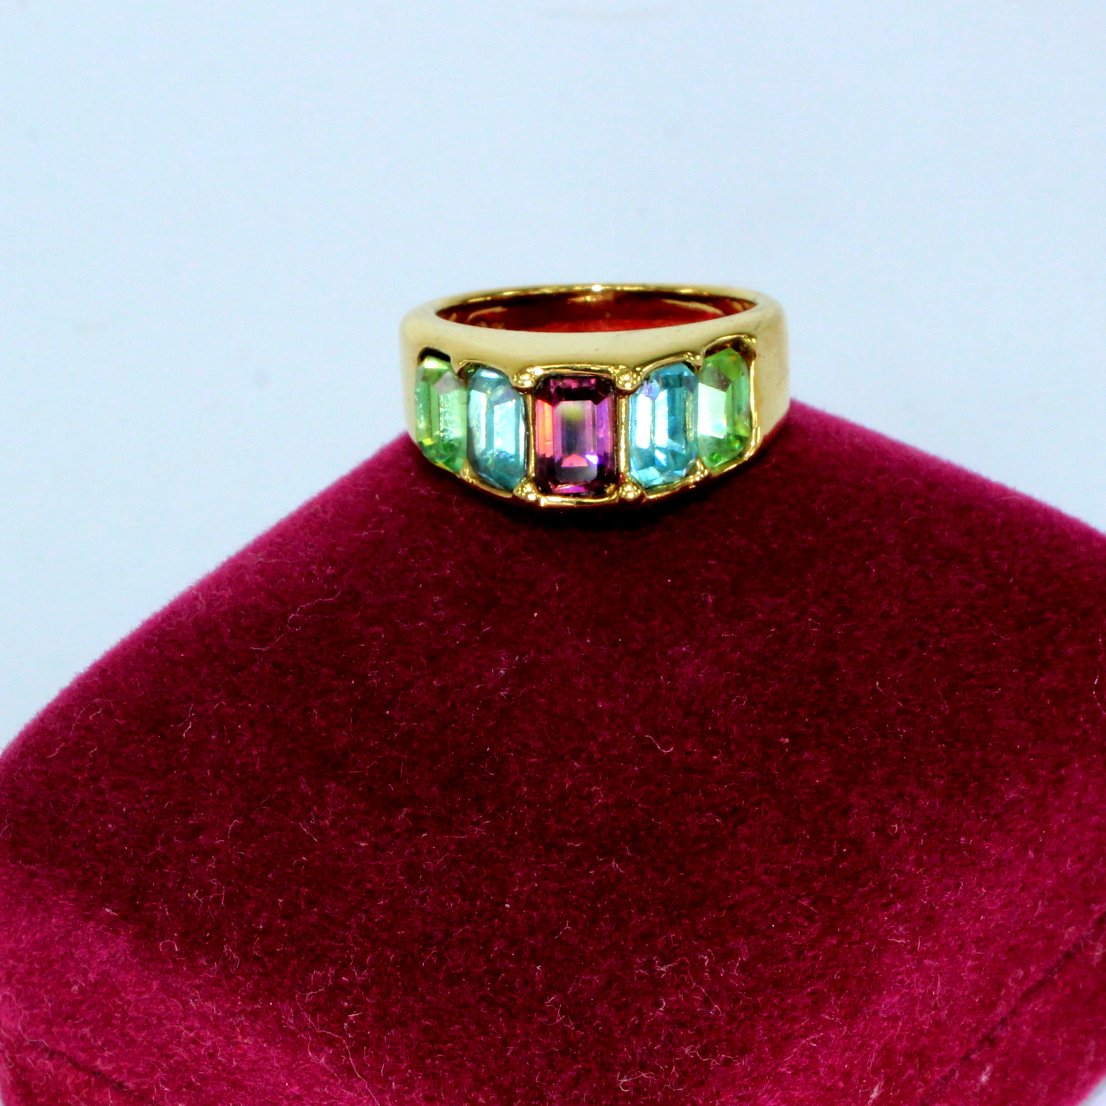 Premier Designs PD Vintage Multi Color Ring Amethyst Peridot Topaz Size 6 closeup of design